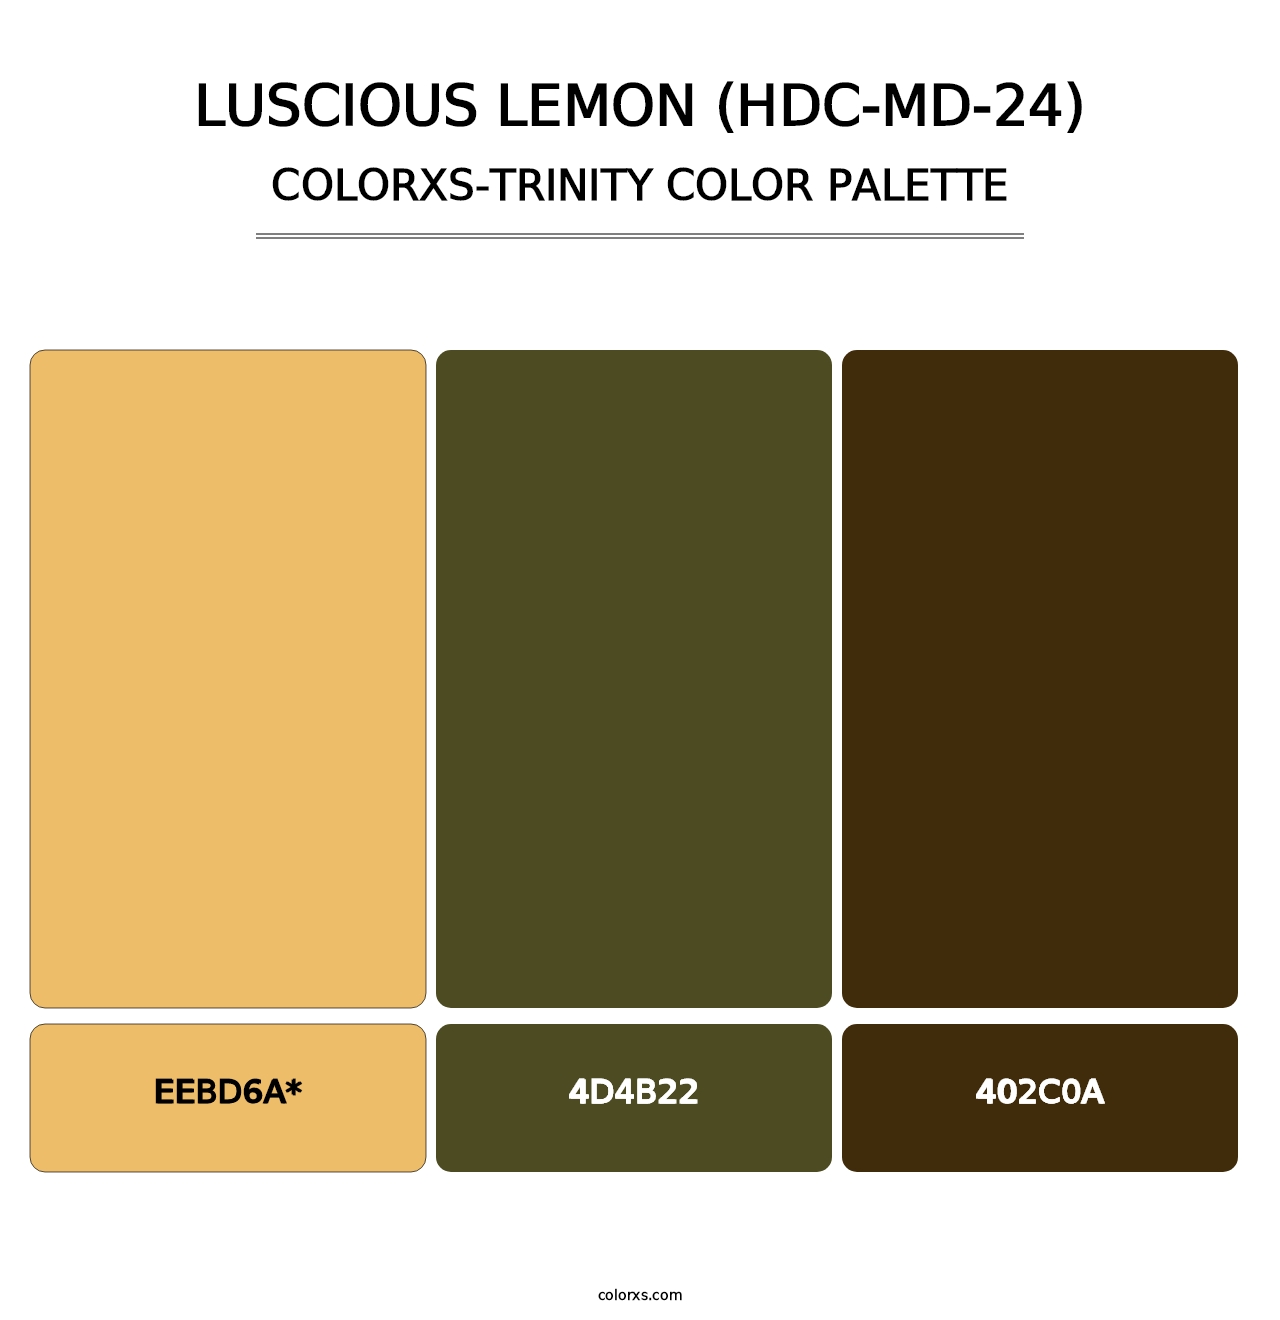 Luscious Lemon (HDC-MD-24) - Colorxs Trinity Palette